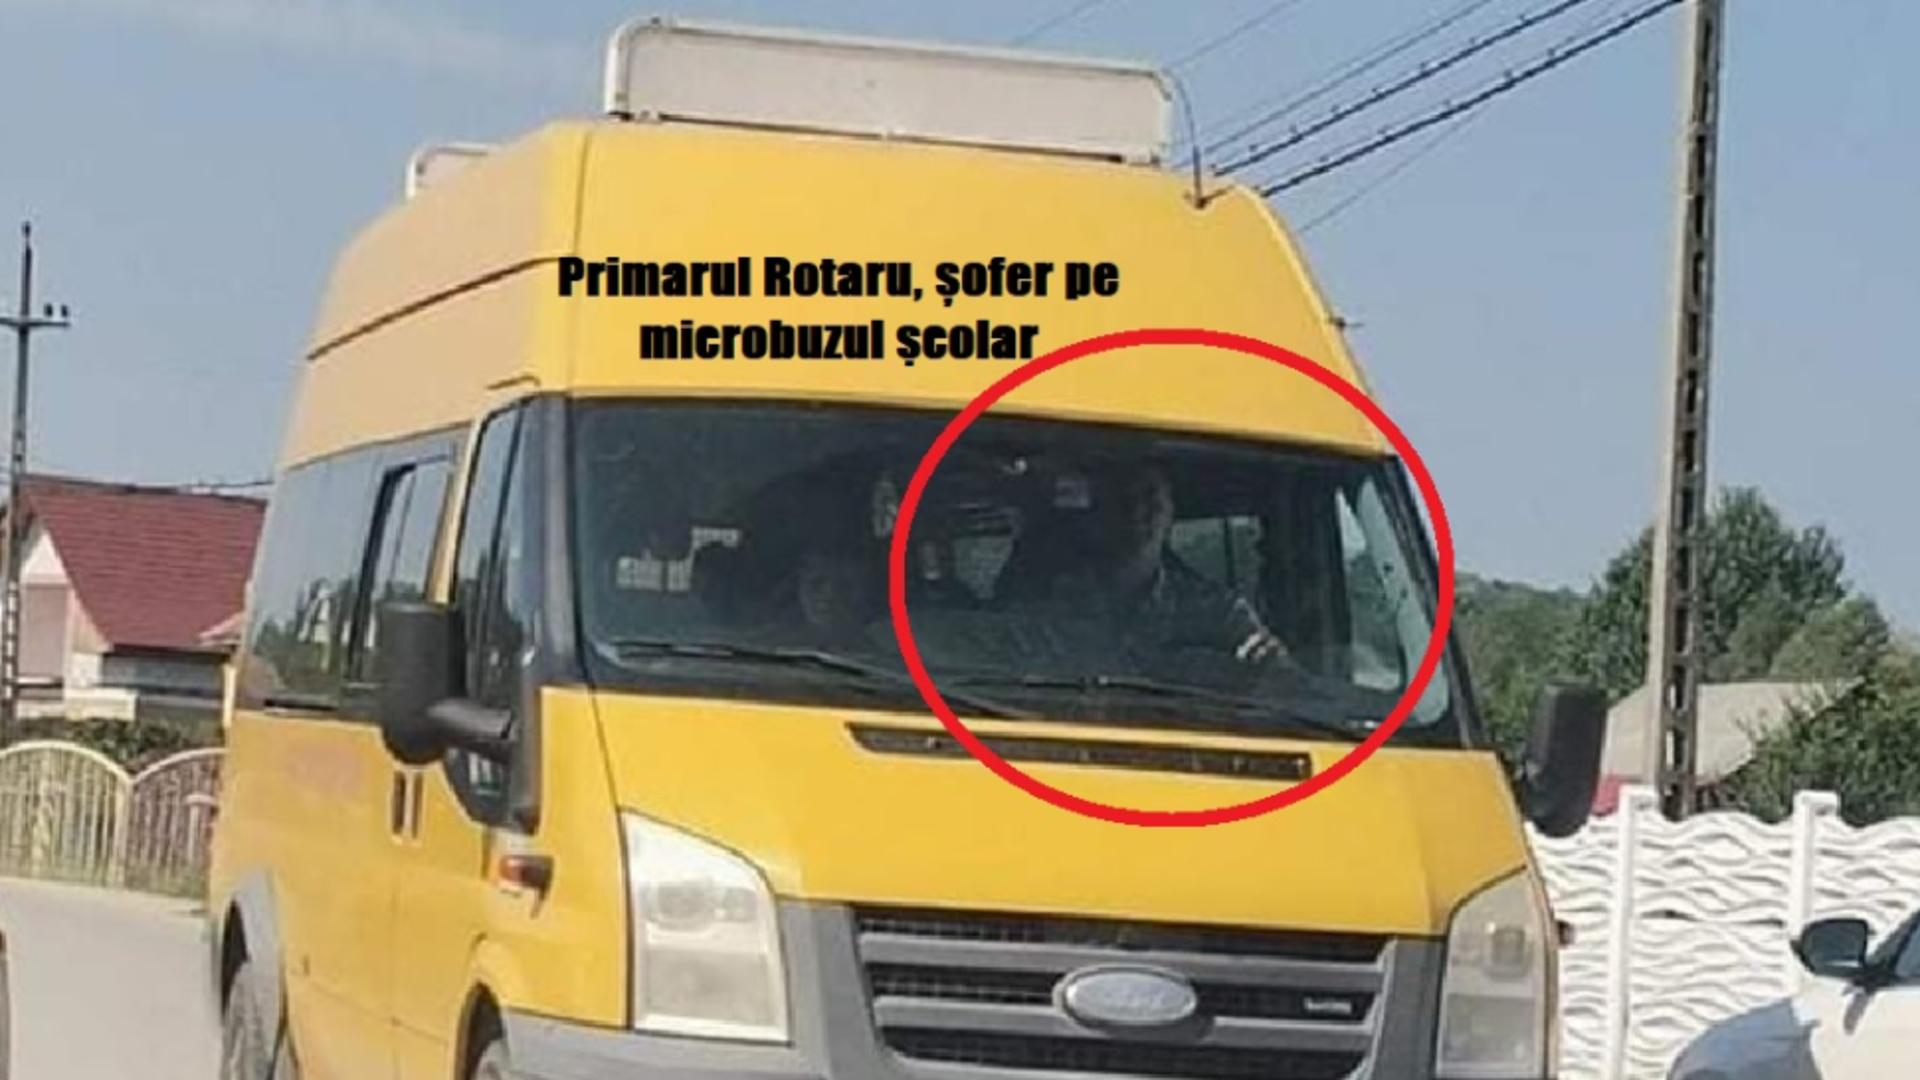 Primarul Viorel Rotaru conduce microbuzul școlar - Foto: gorjonline.ro